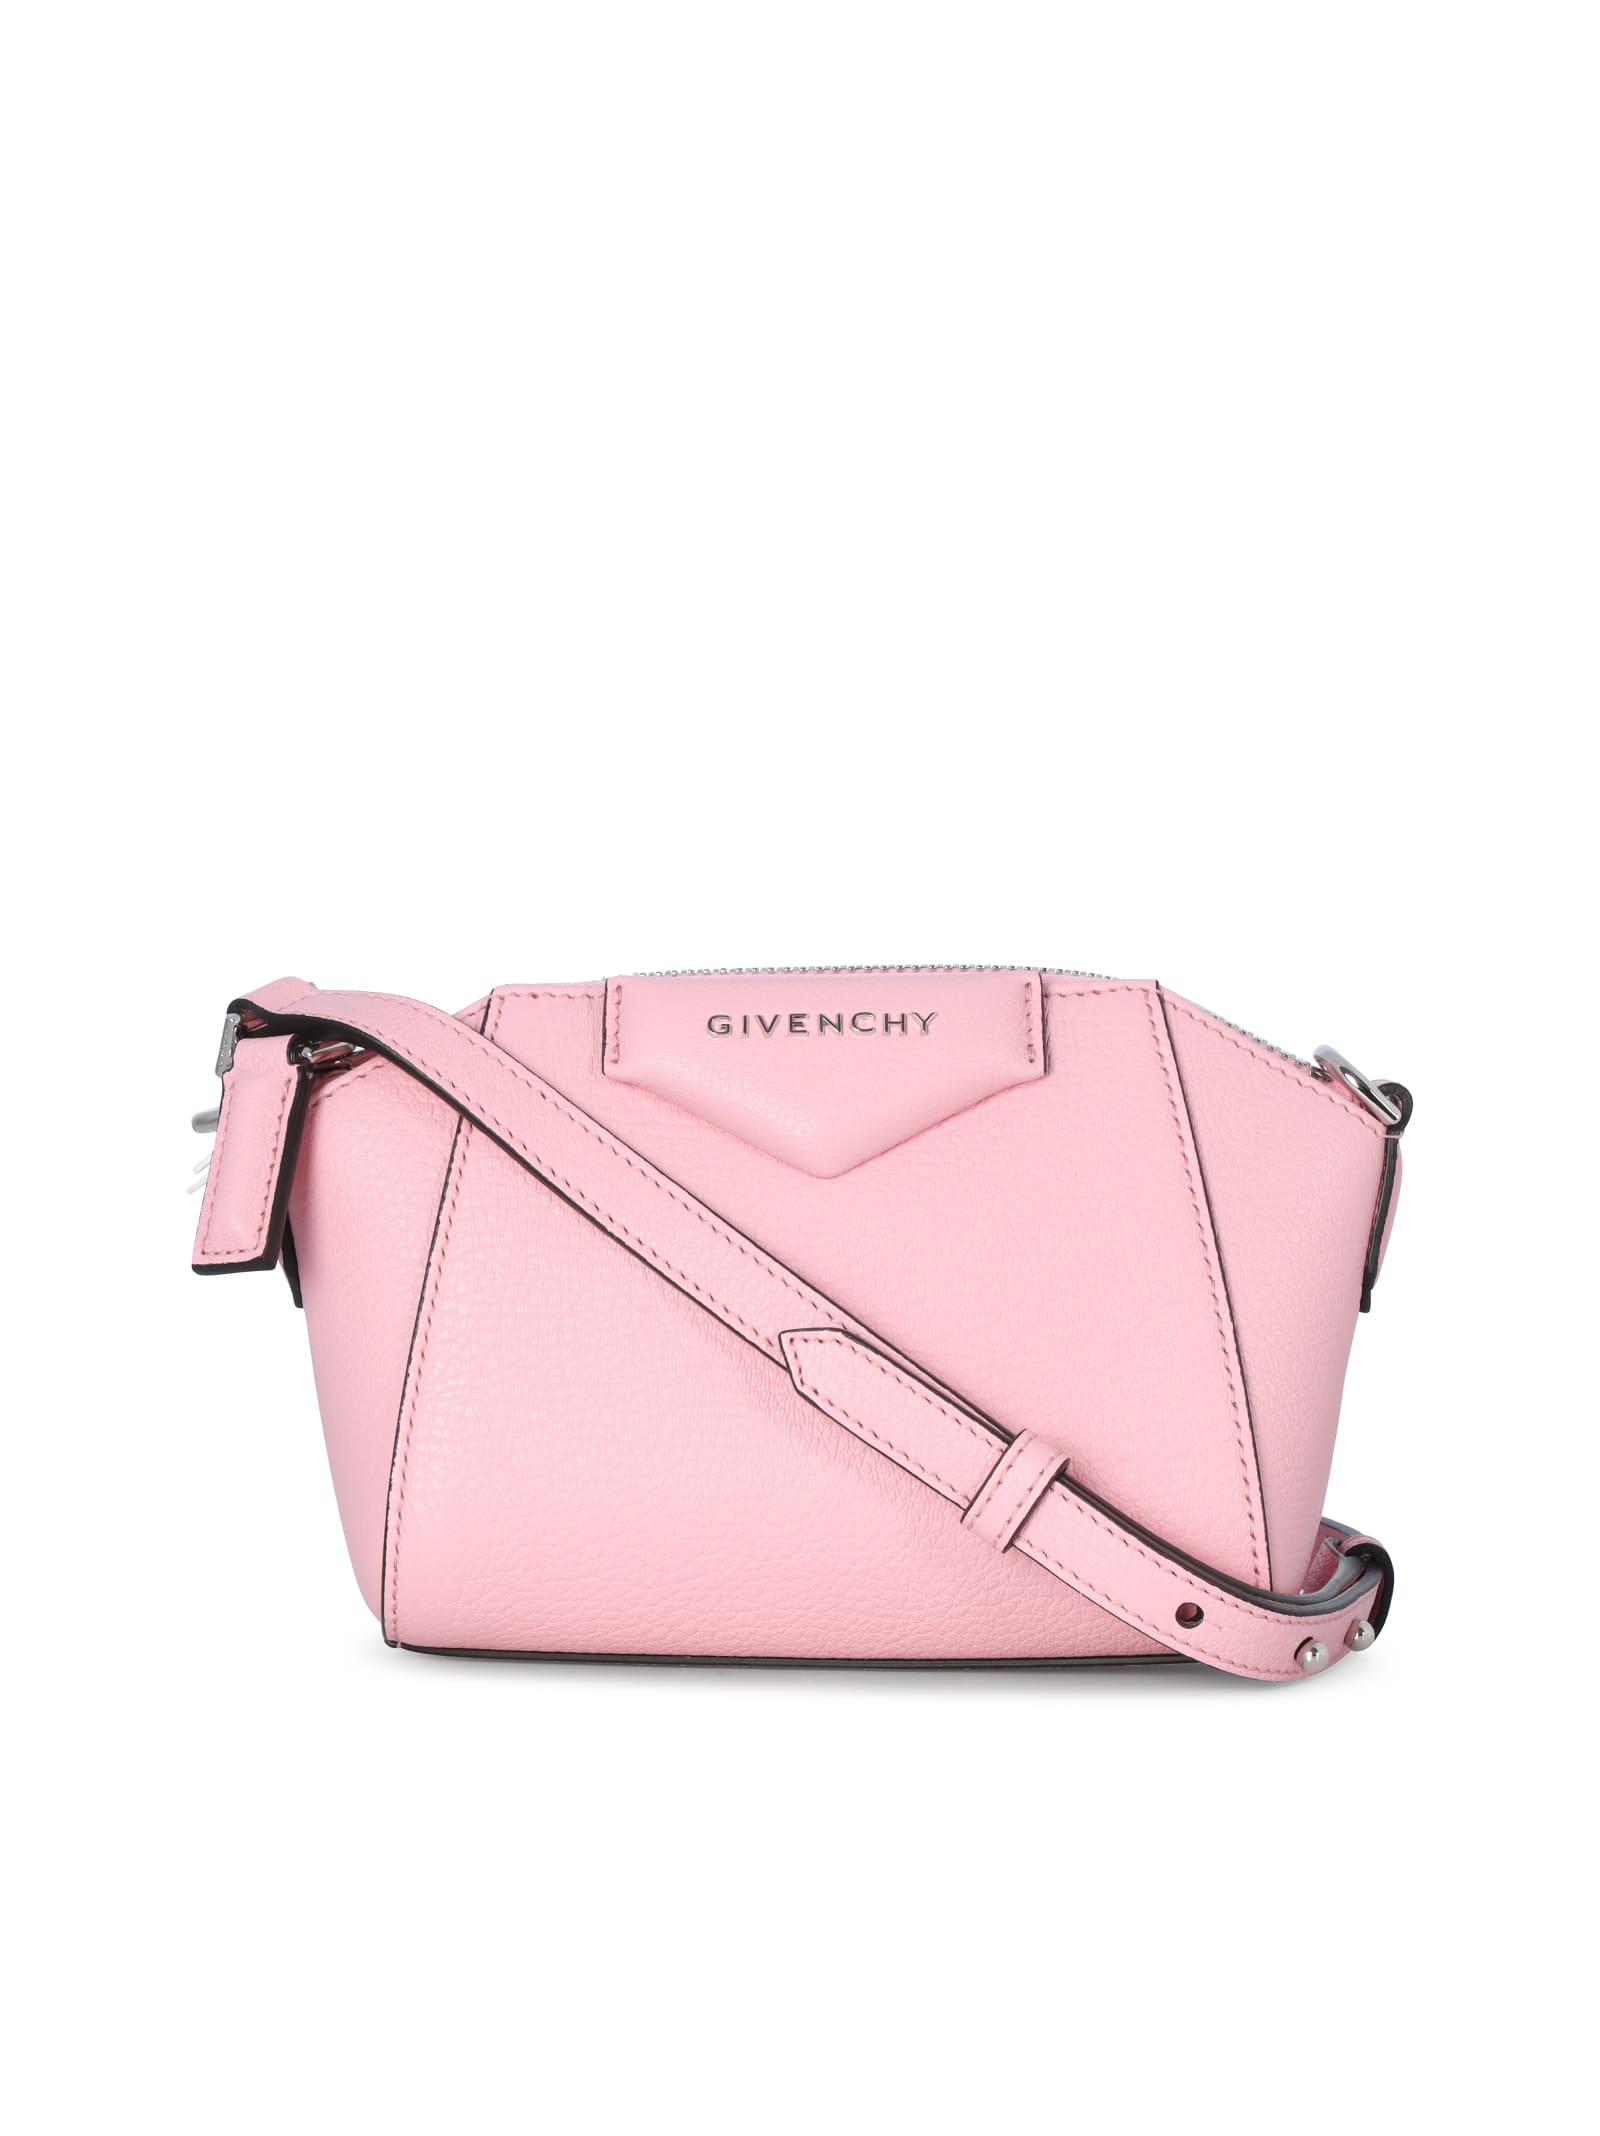 Givenchy Antigona Nano Bag In Pink & Purple